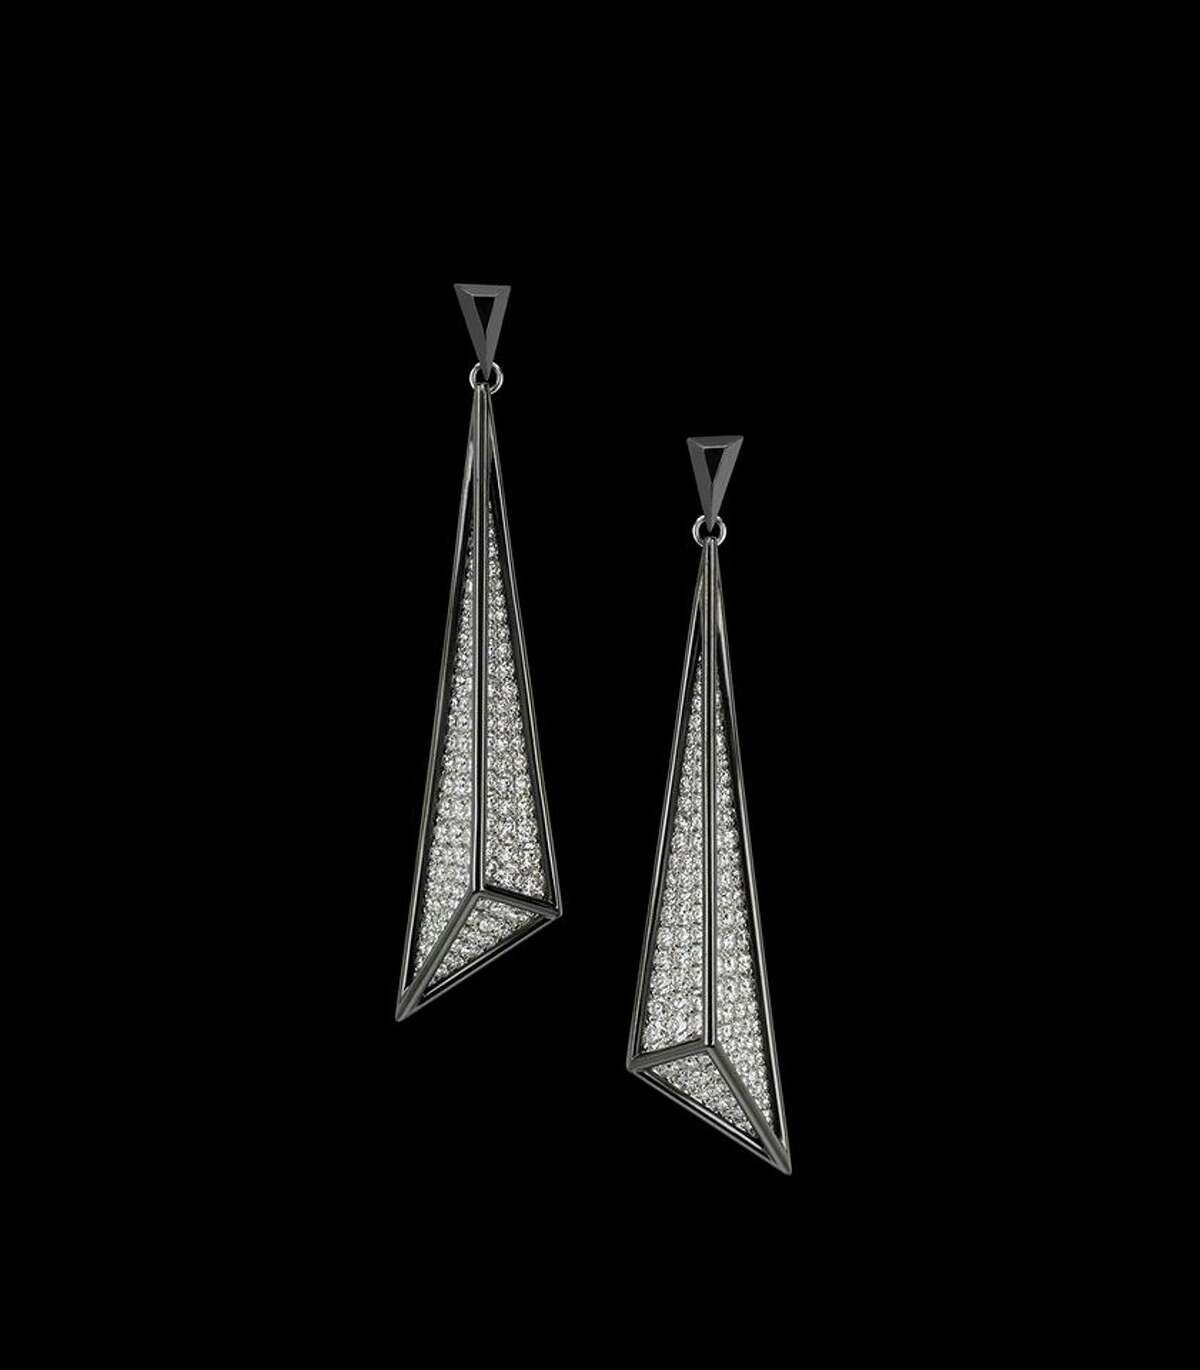 Zoltan David 3.75 carat diamond earrings.